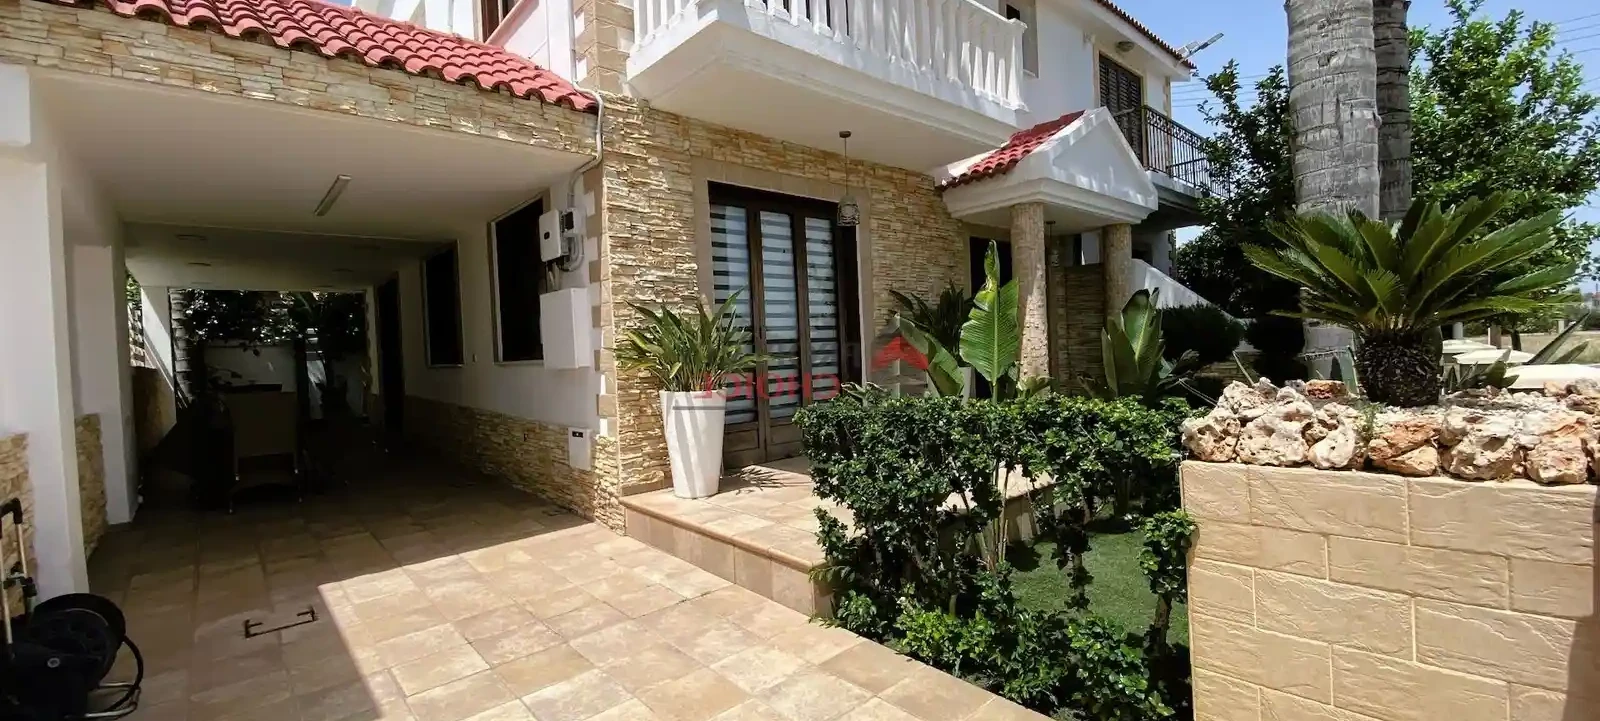 3-bedroom villa fоr sаle €247.000, image 1